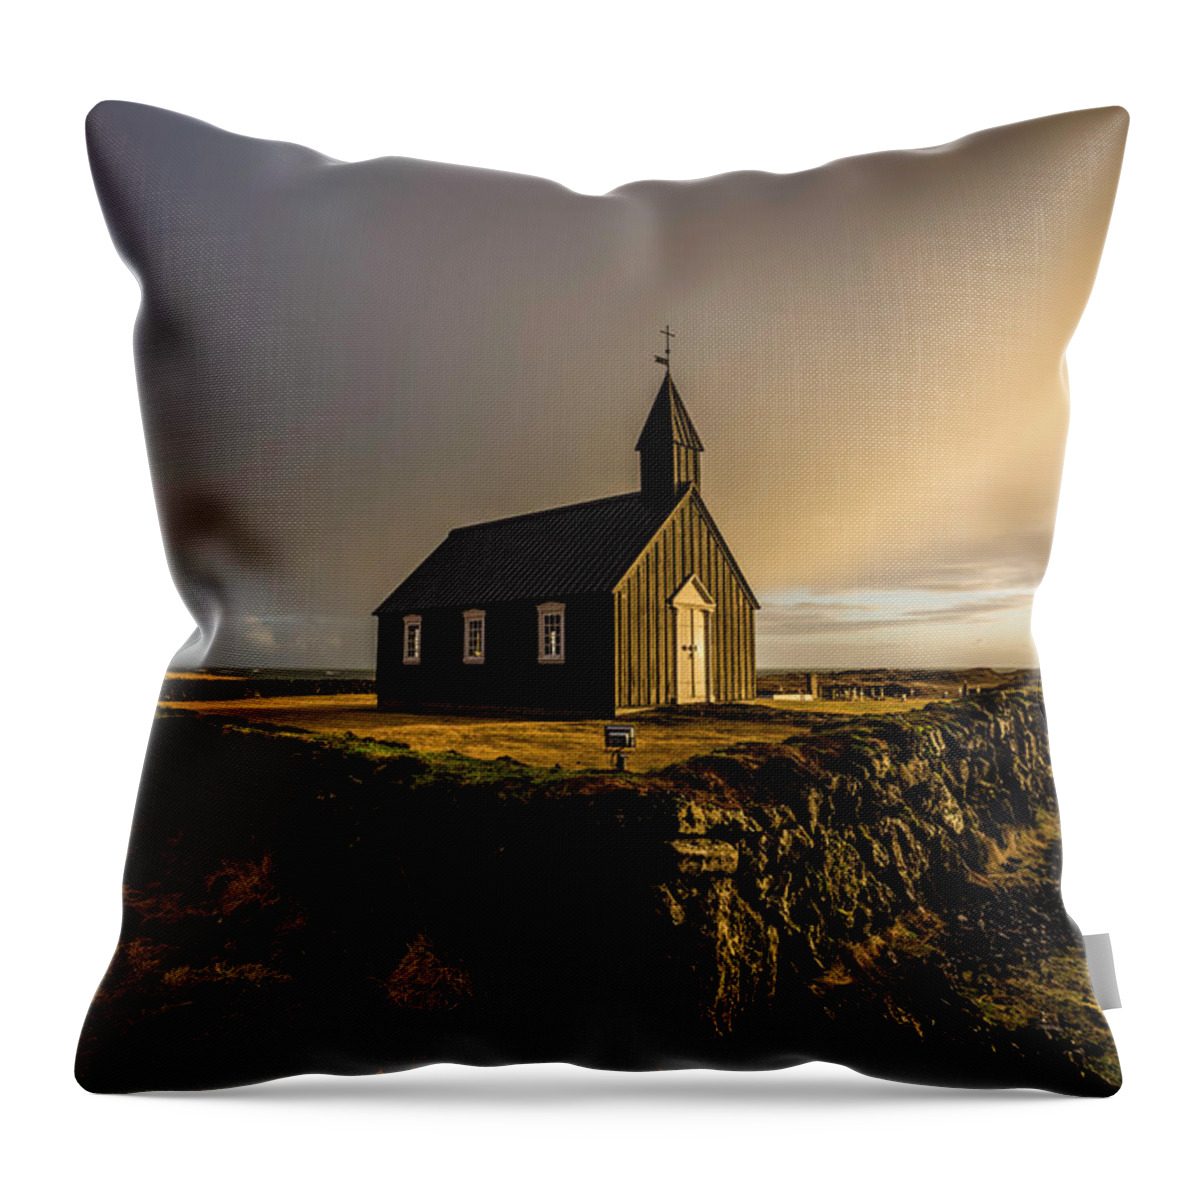 Landscape Throw Pillow featuring the photograph Black Church Golden Hour by Scott Cunningham